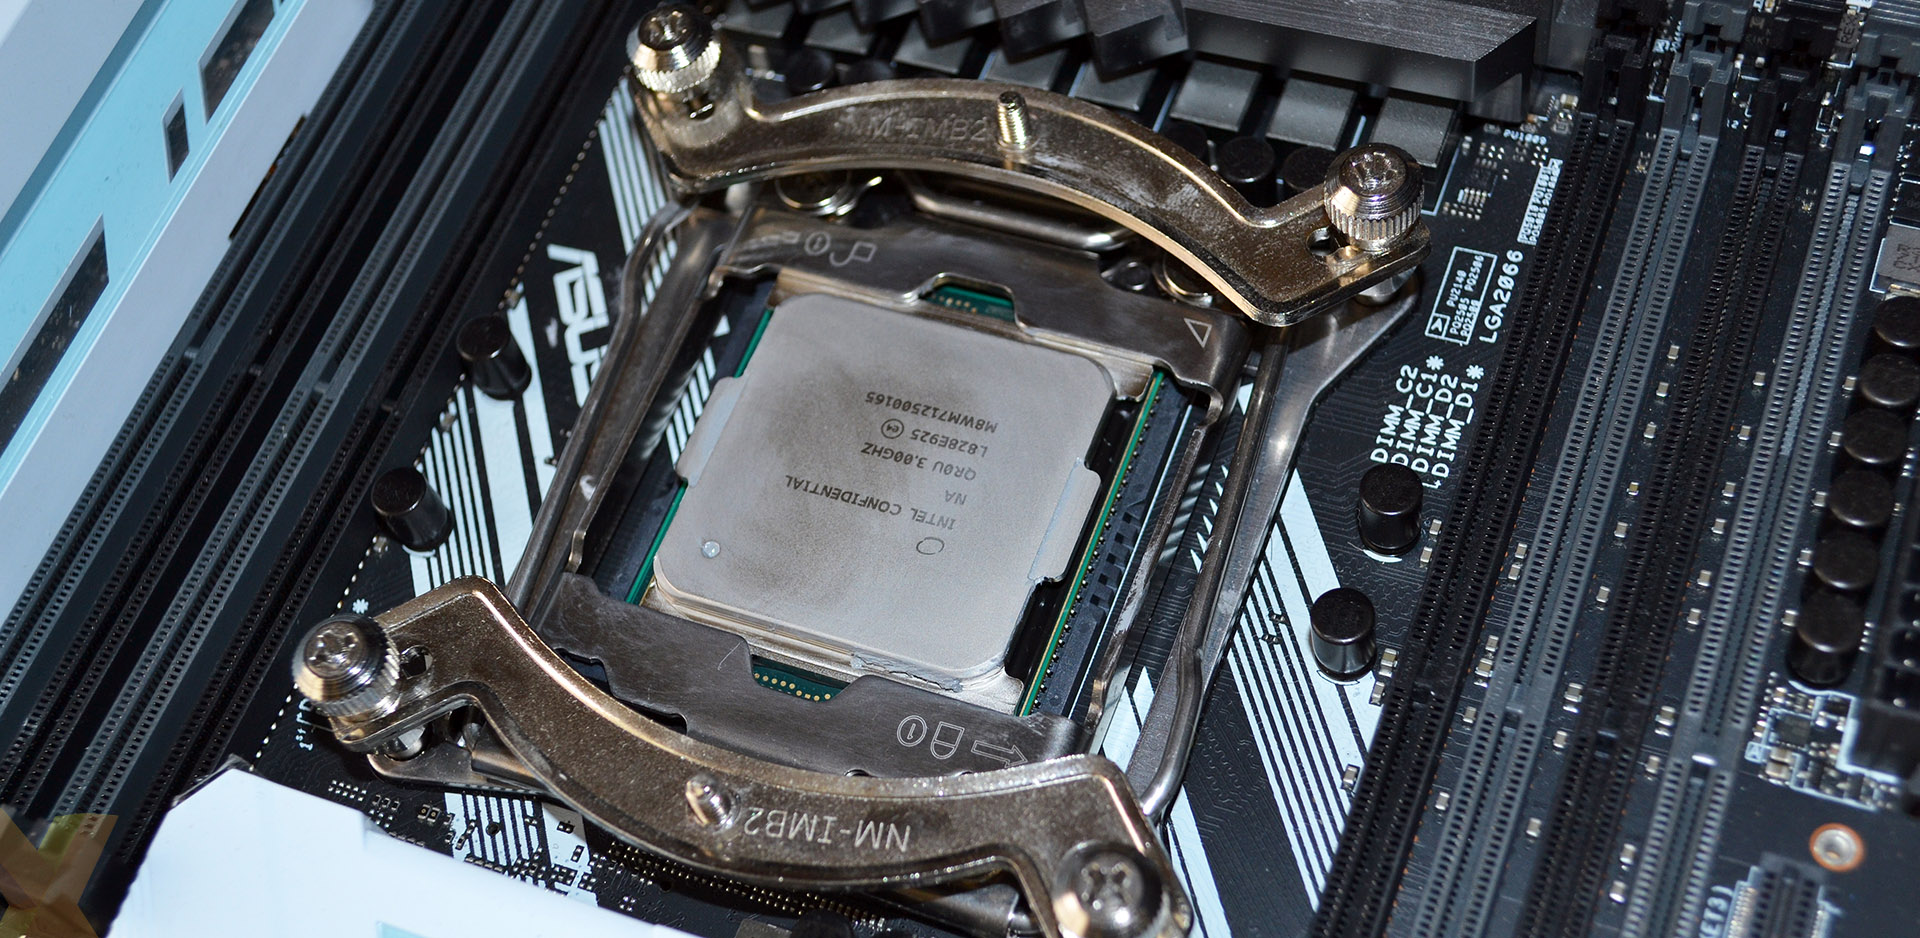 zoete smaak vis Glimlach Review: Intel Core i9-9980XE - CPU - HEXUS.net